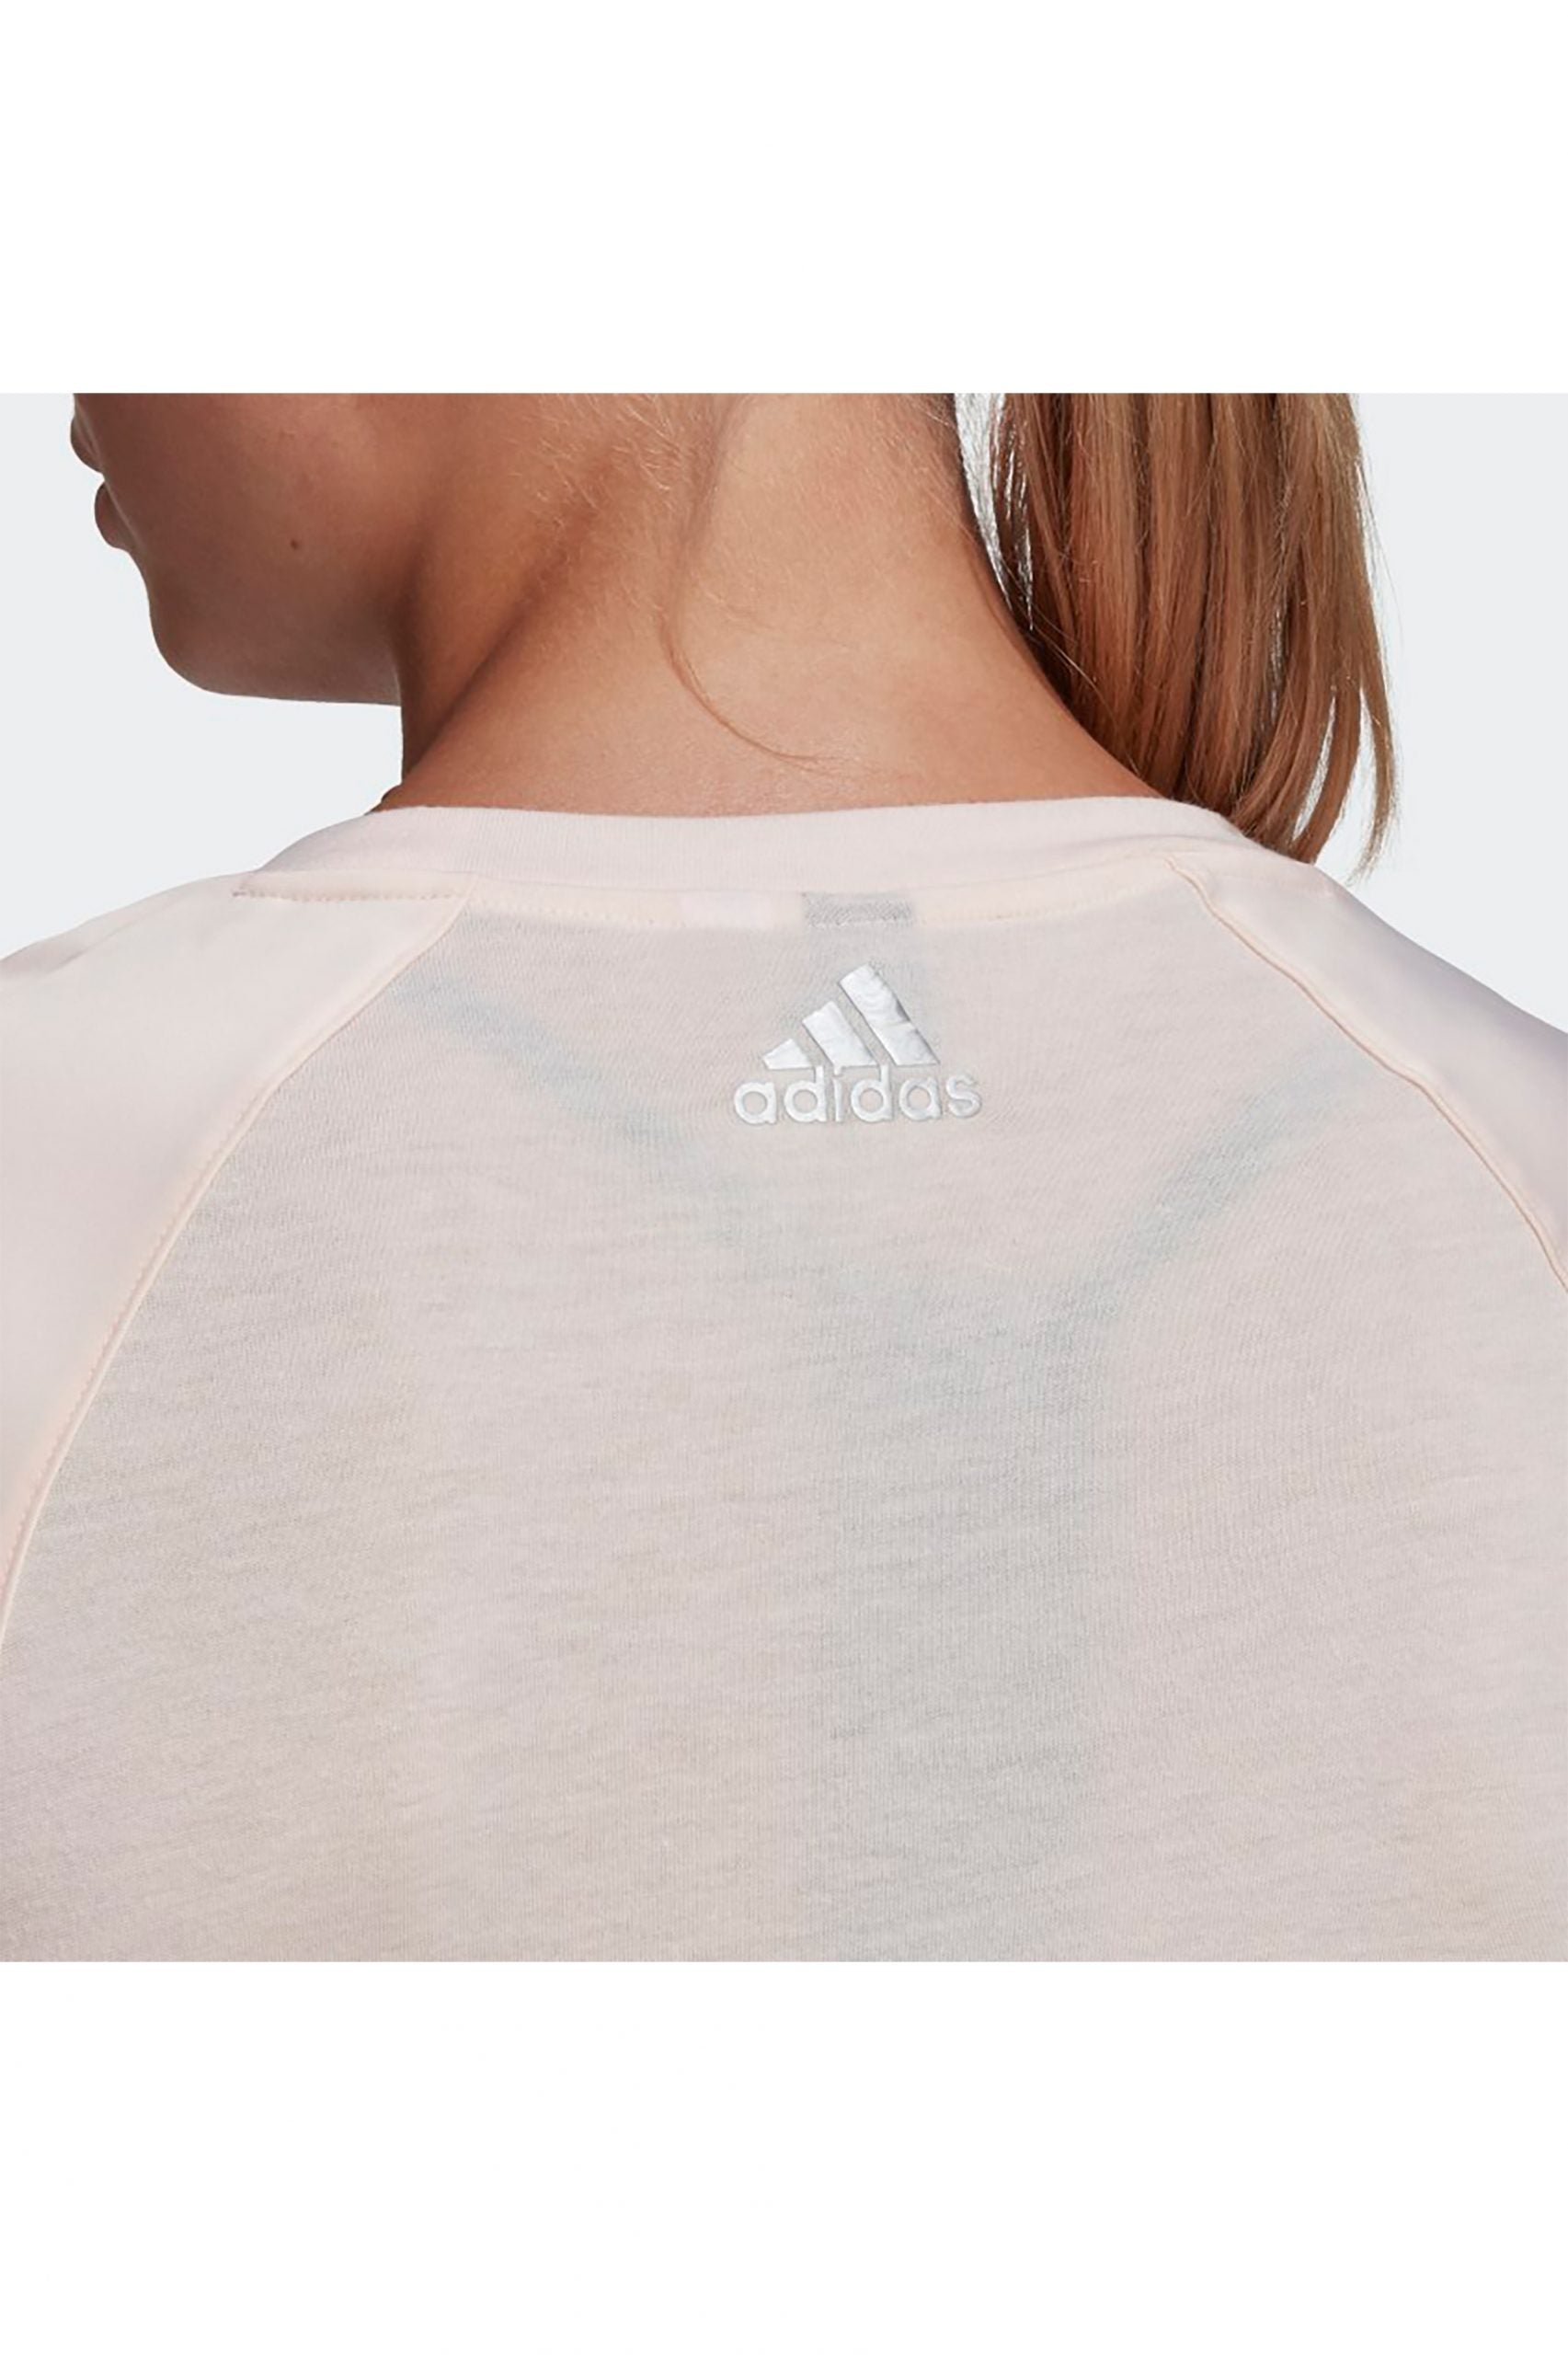 Adidas Glam On Aeroready Tee - Pink Tint